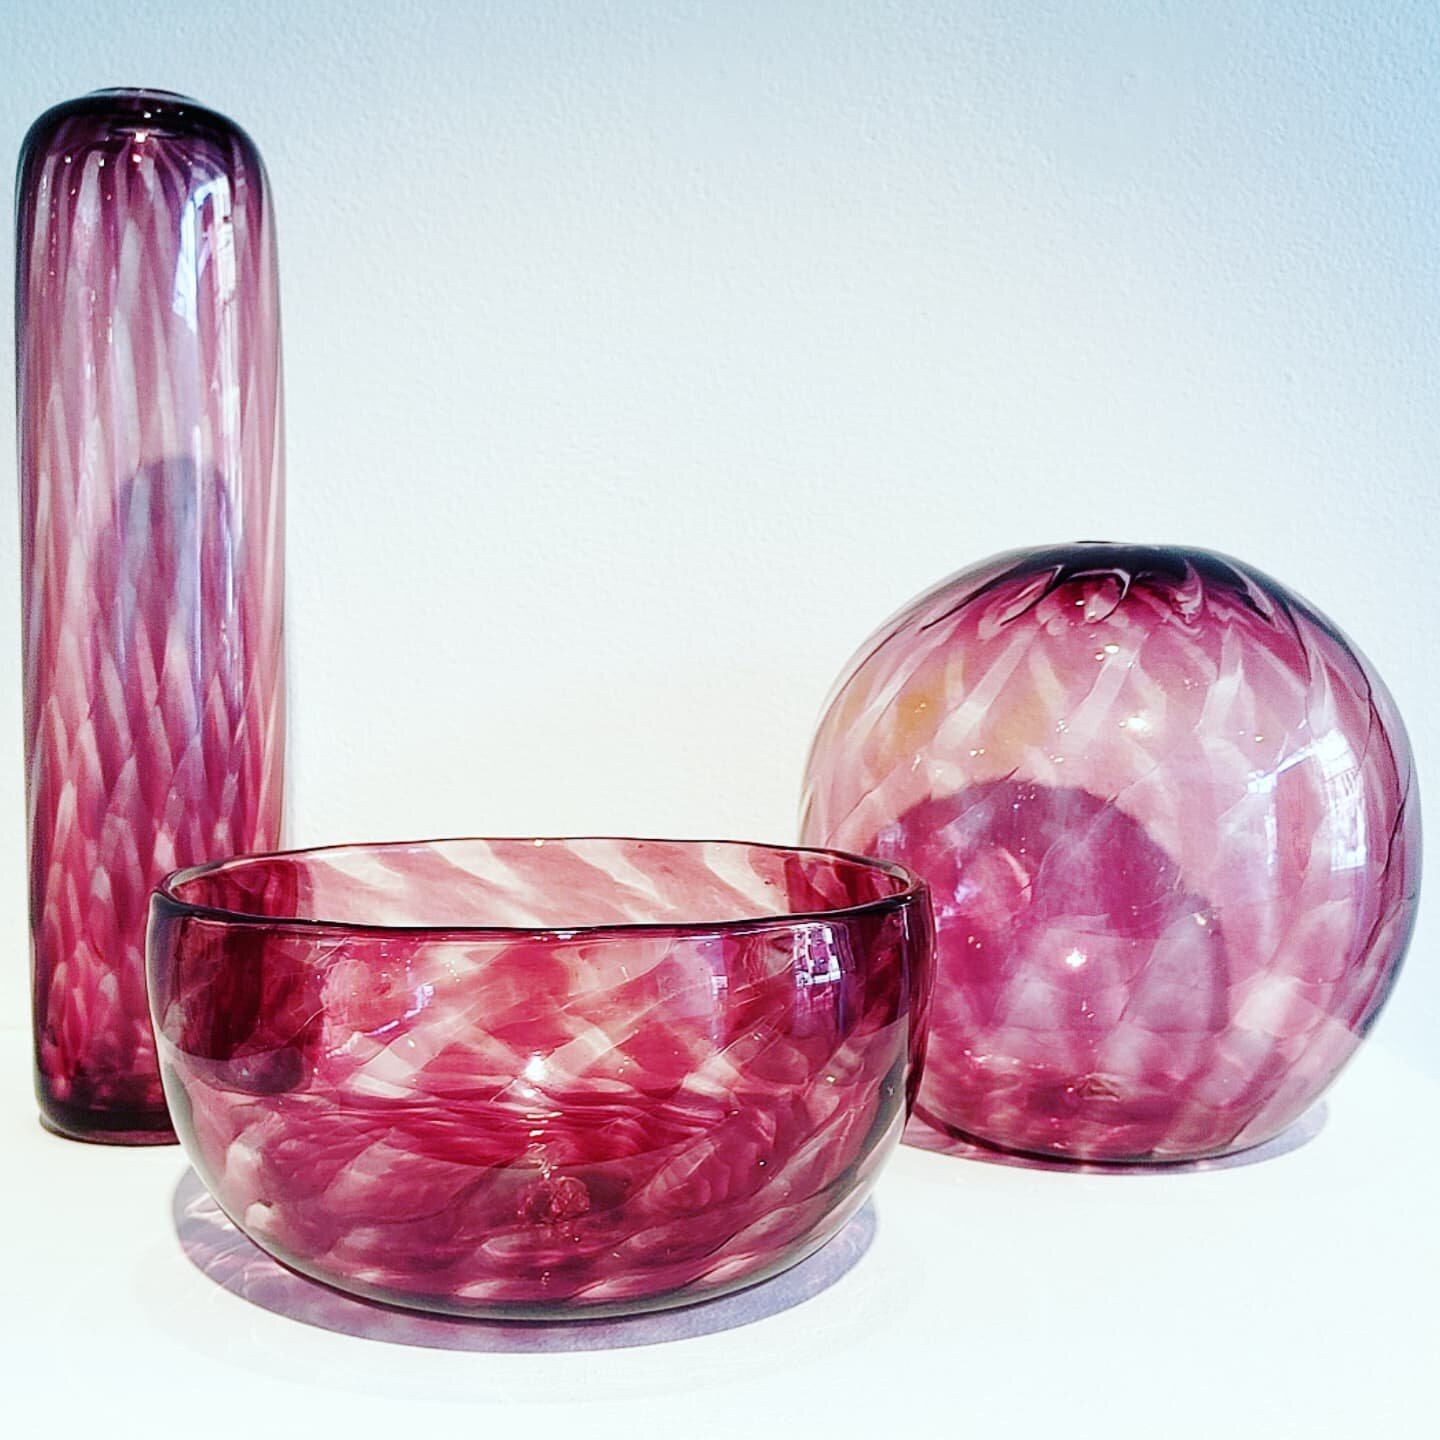 Purple Trio available @hawkgalleries

#blownglass #glassartist #glassofig #glassblowing #glass #glassforsale